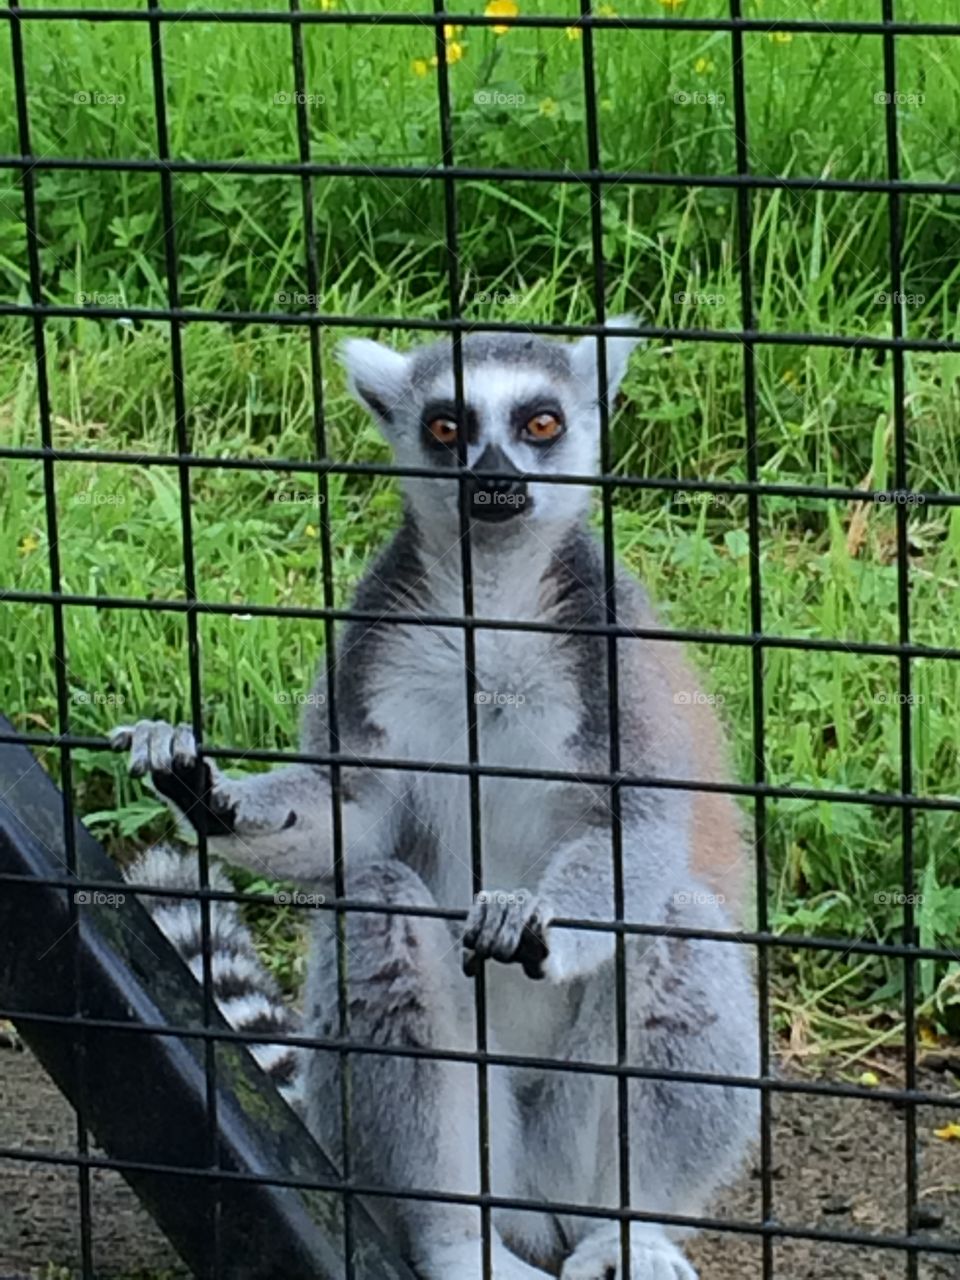 Ring-tailed lemur camperdown park Dundee 